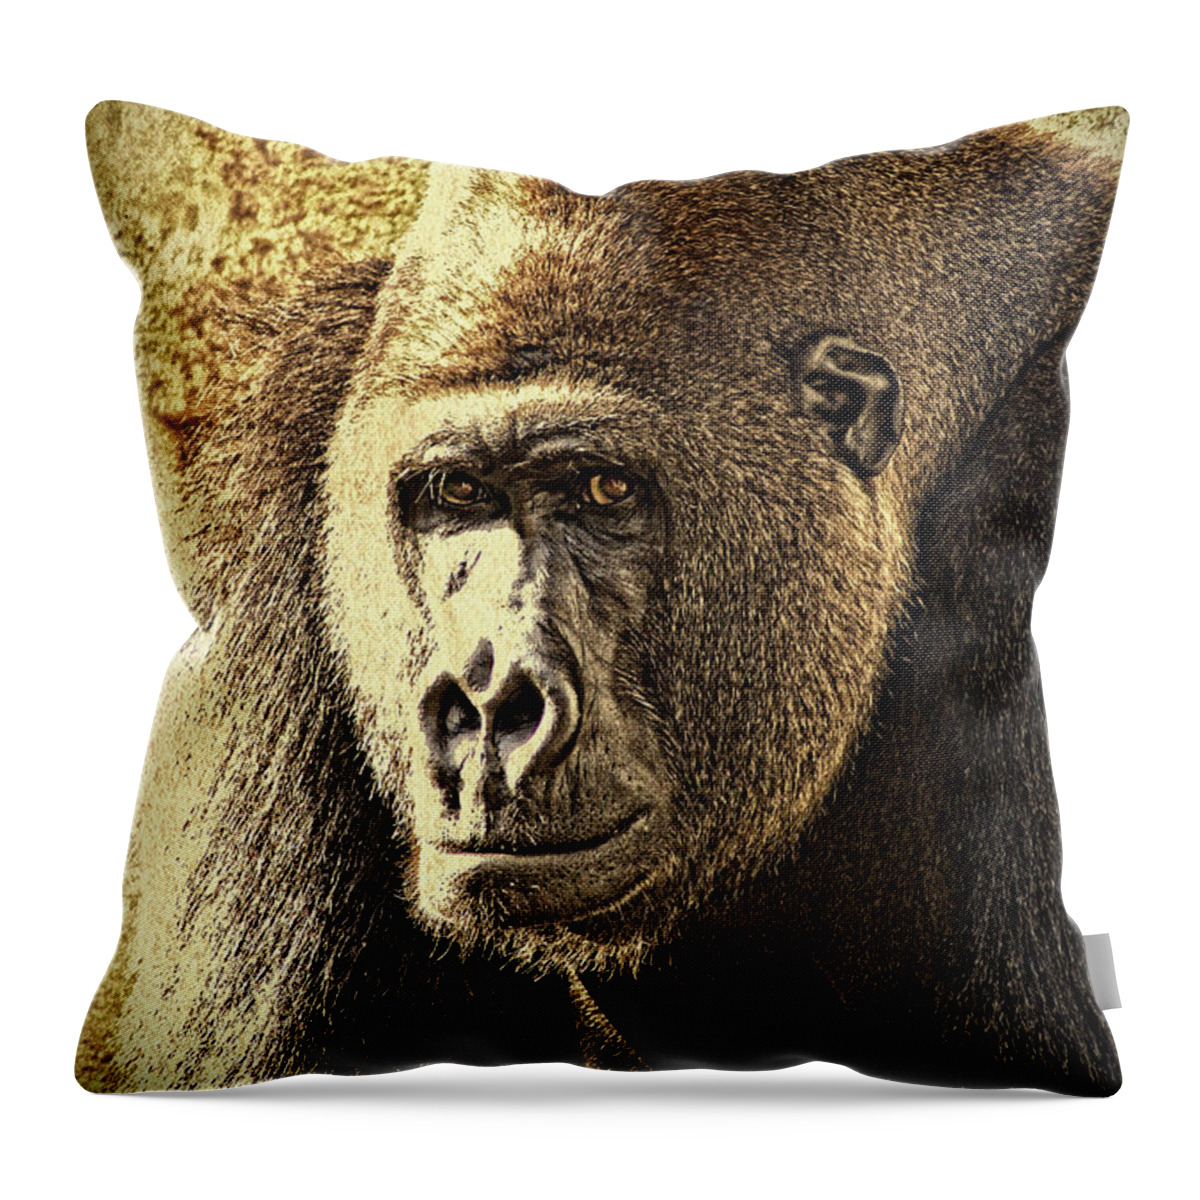 Gorilla Throw Pillow featuring the photograph Gorilla Portrait 2 by Heiko Koehrer-Wagner